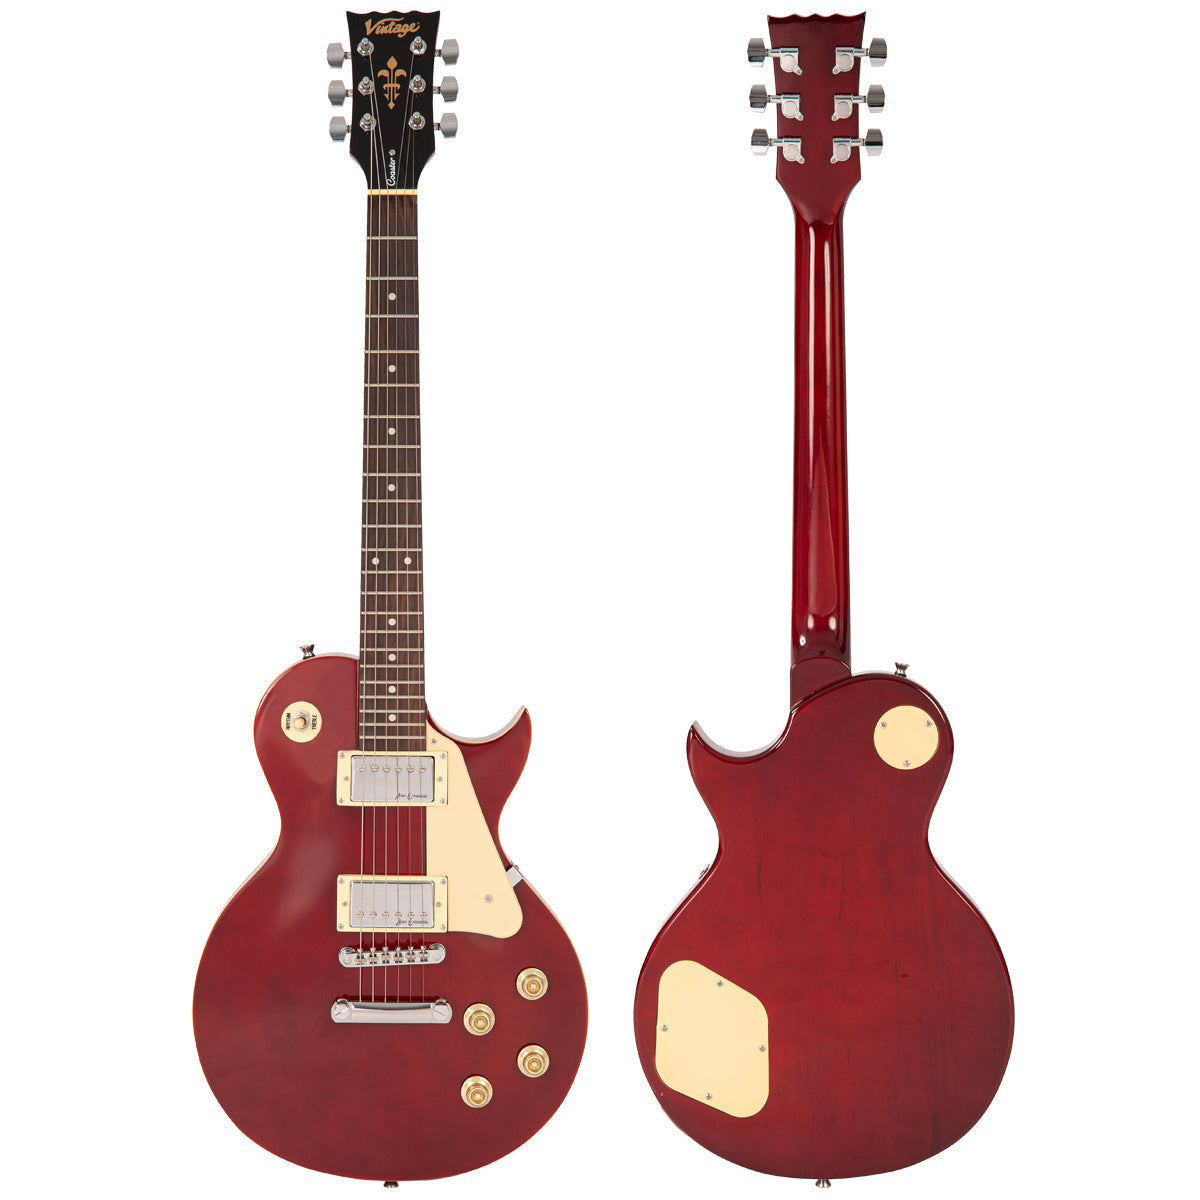 Vintage V10 Coaster Series Electric Guitar Pack ~ Wine Red, Electric Guitar for sale at Richards Guitars.